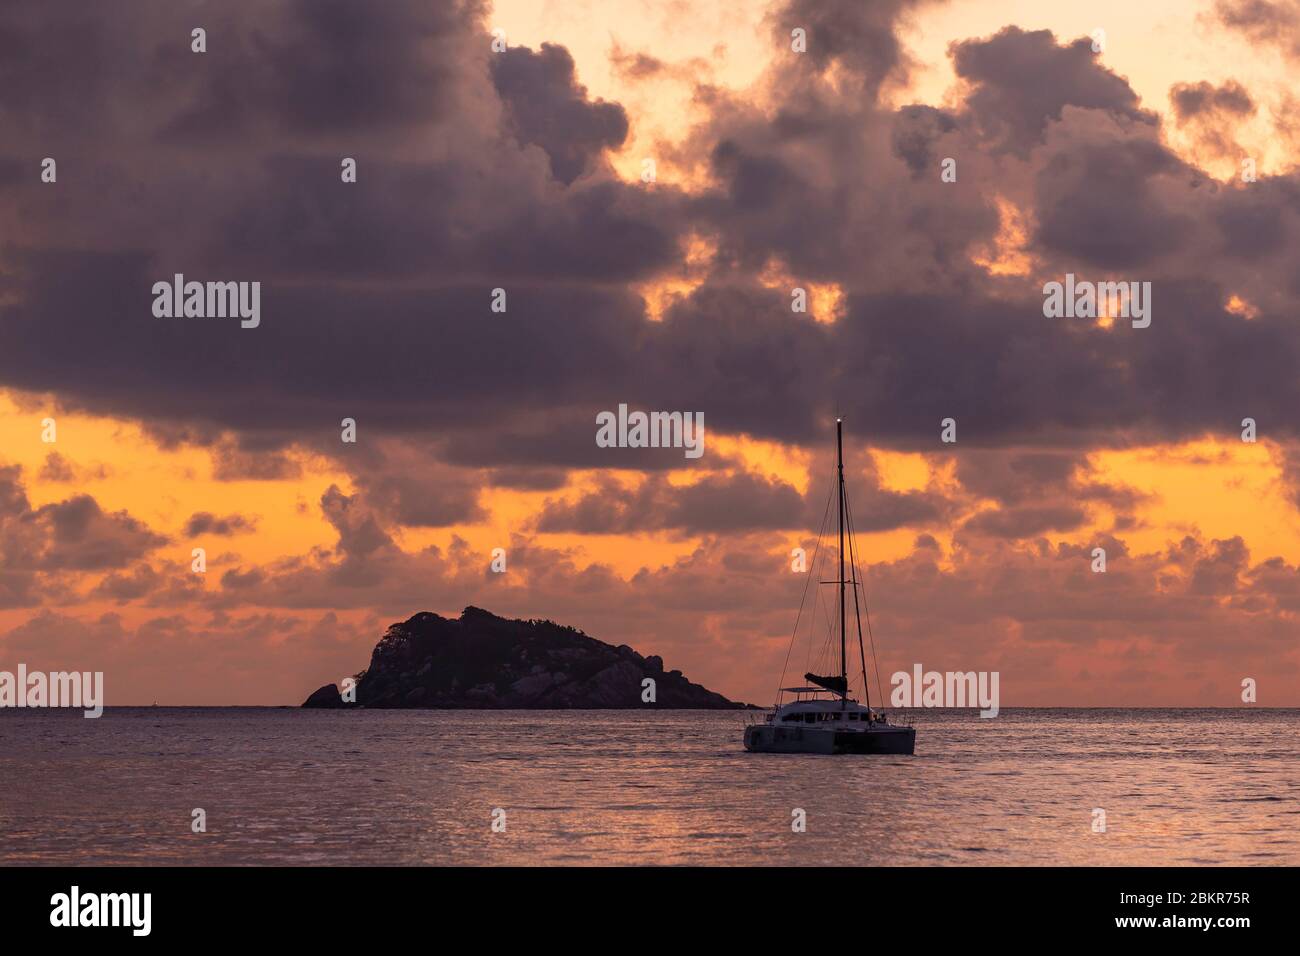 Seychelles, Sainte Anne island, boats at anchor Stock Photo